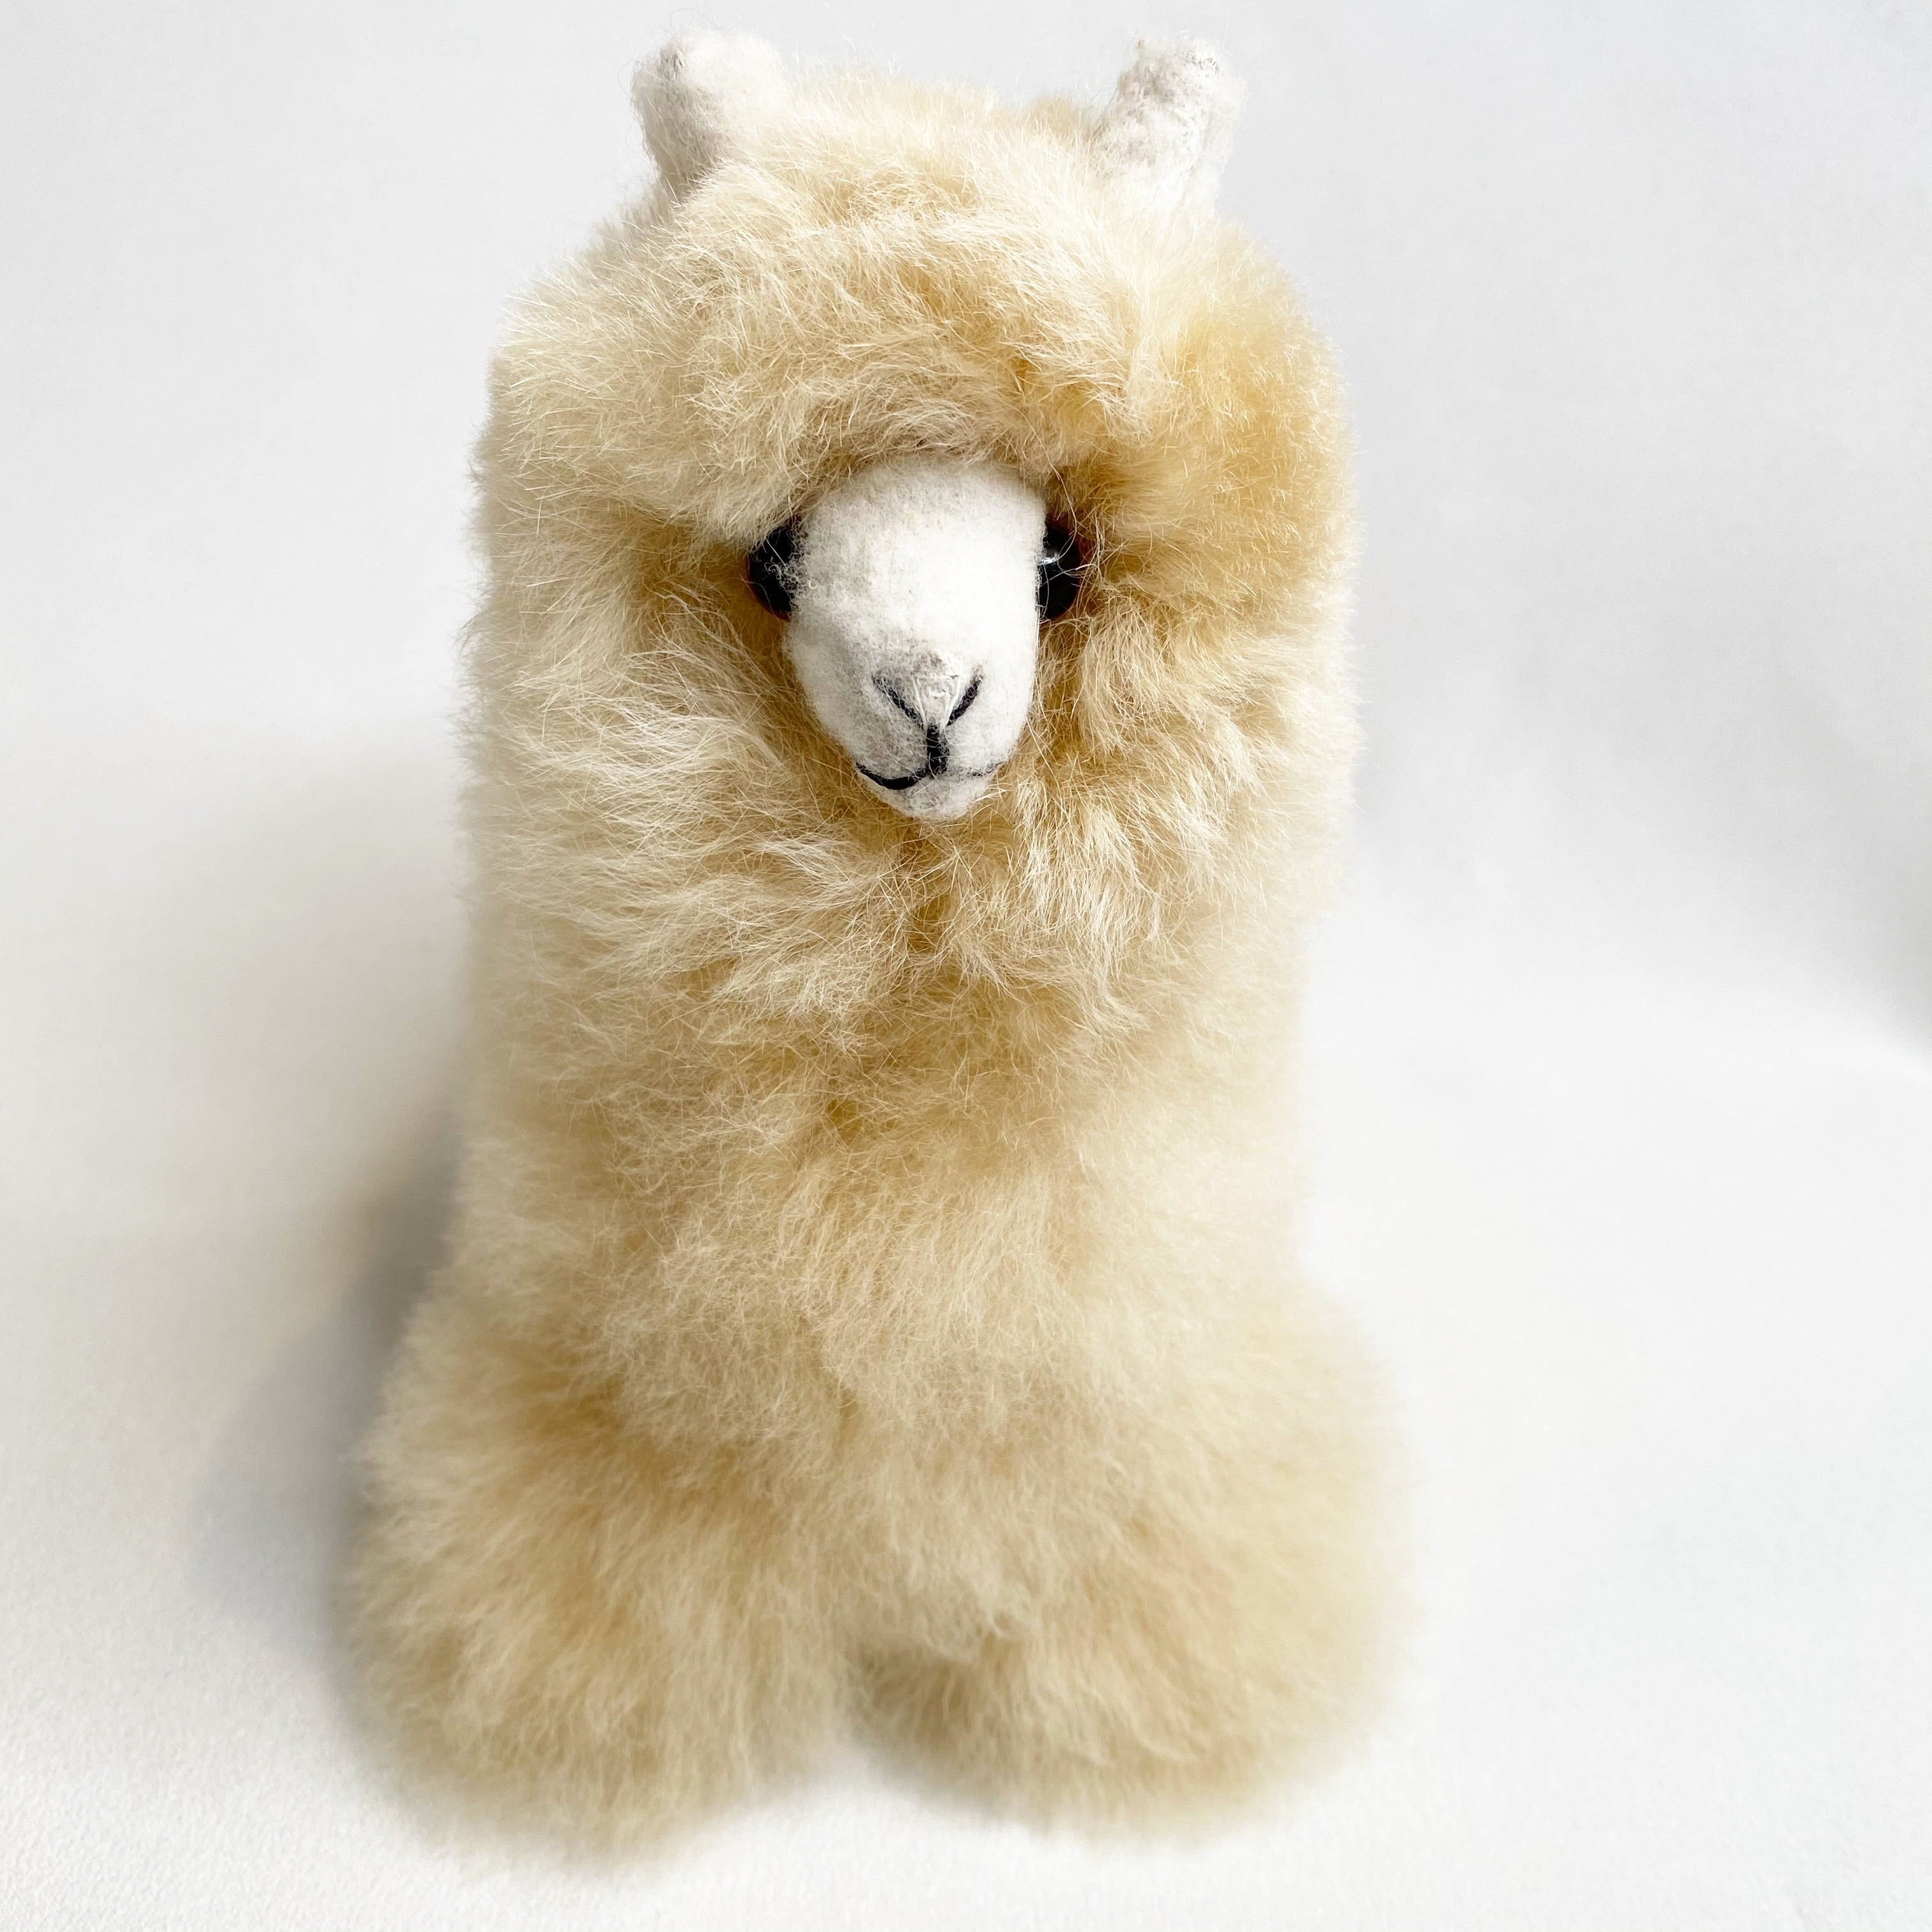 Alpaca stuffed Toy M20